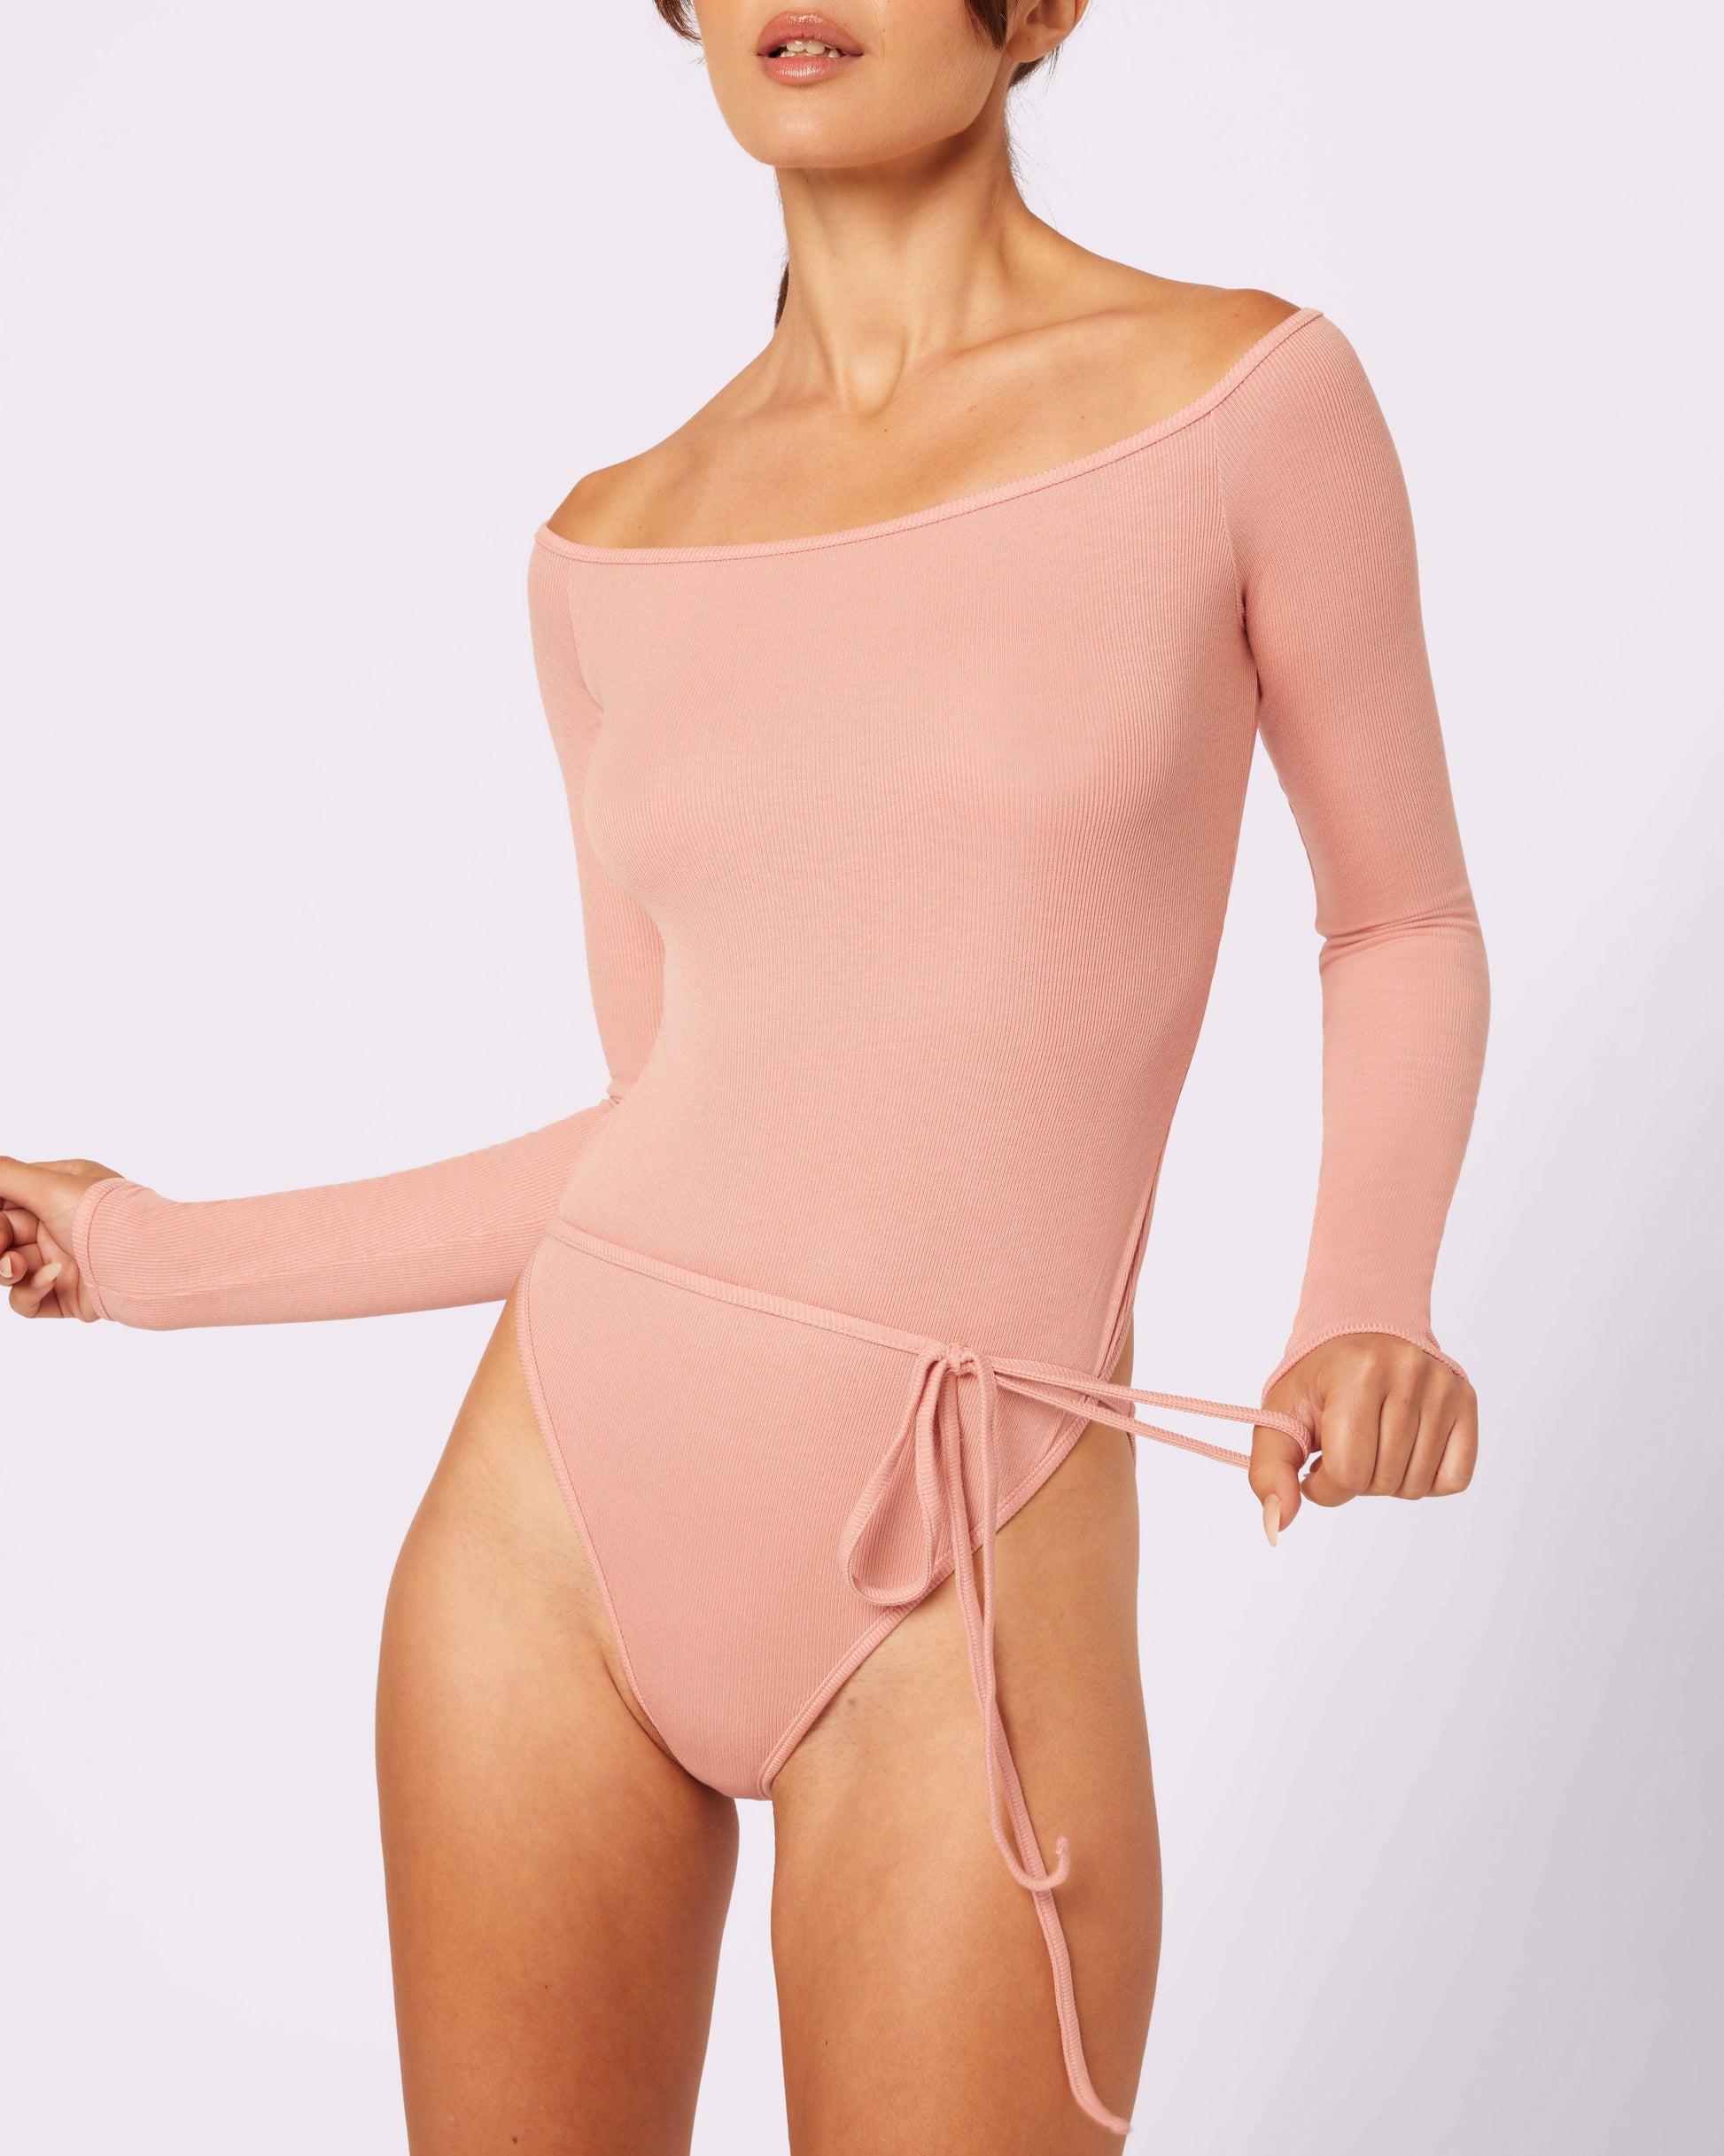 I 💜 NEW @honeylove pieces! • Low-Back Bodysuit…SO comfy, SO soft